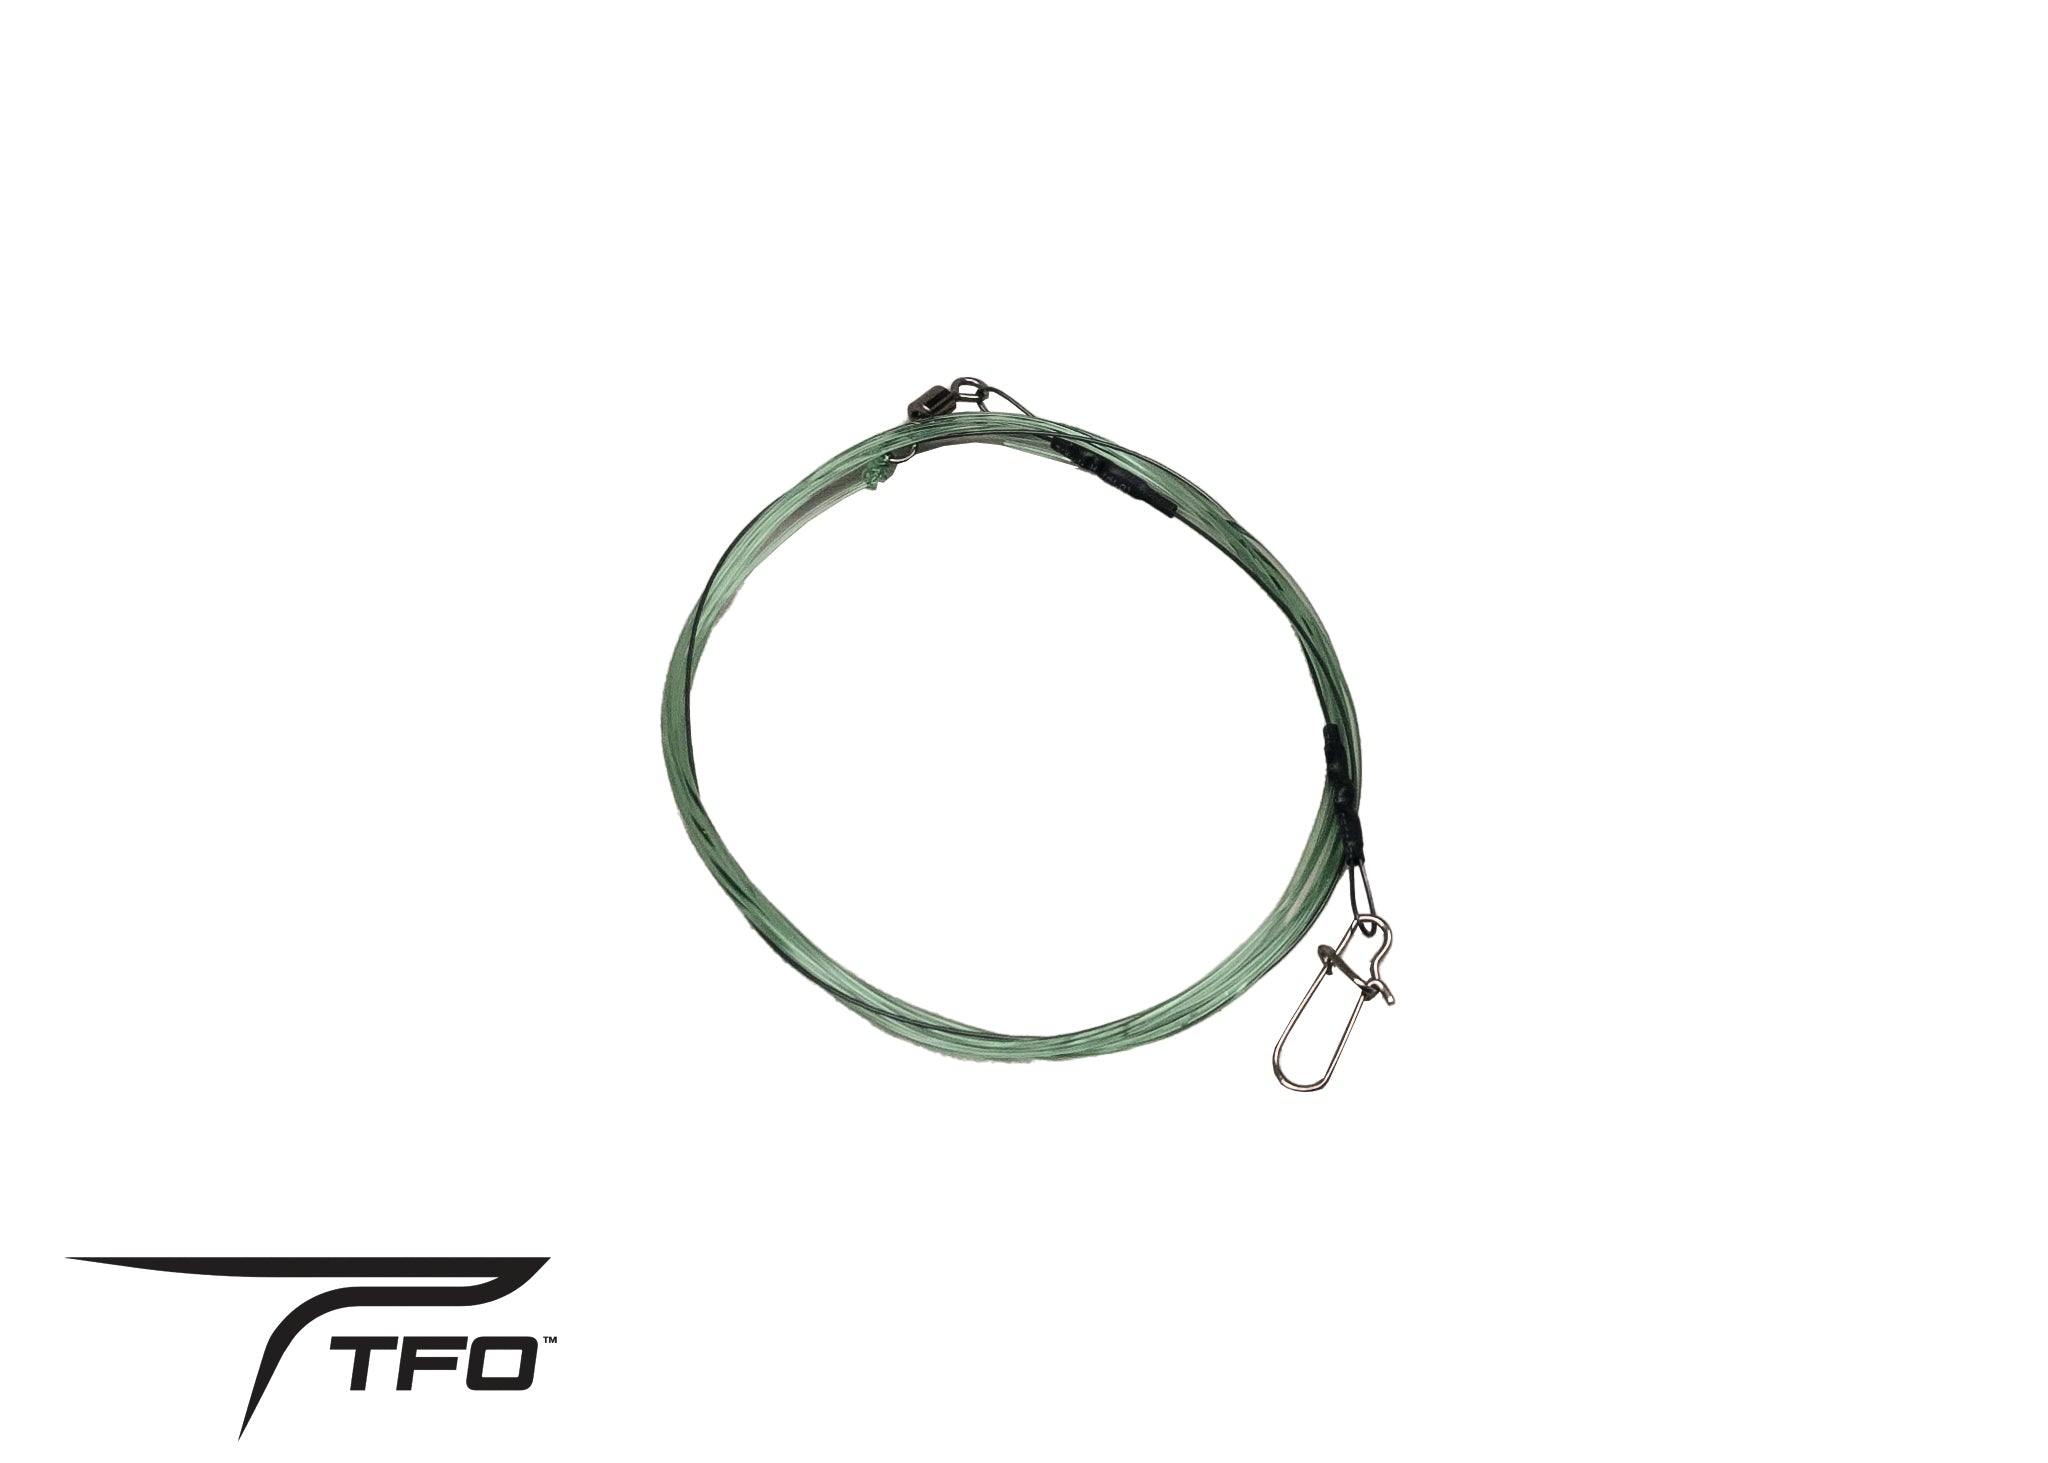 Buy TT Fishing 5.5 Inch Titanium Coated Stainless Steel Fishing